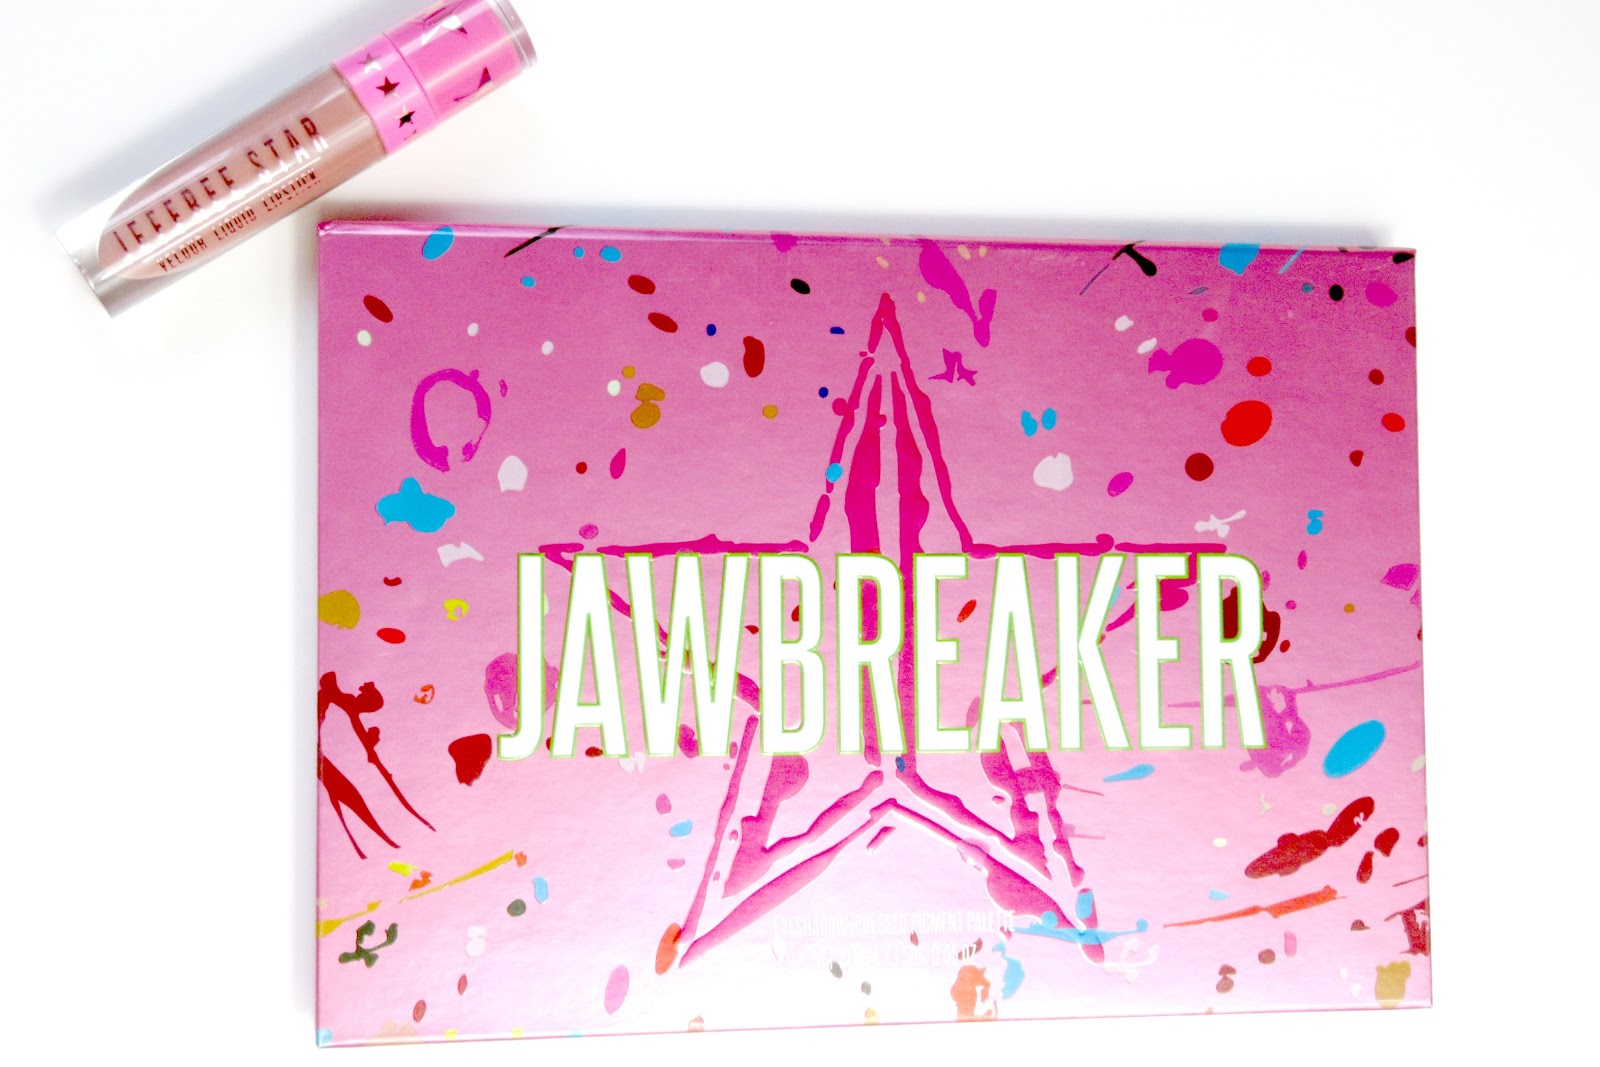 Jeffree Star Jawbreaker Palette Review | shivsblog | Beauty, Fashion, Lifestyle Blog